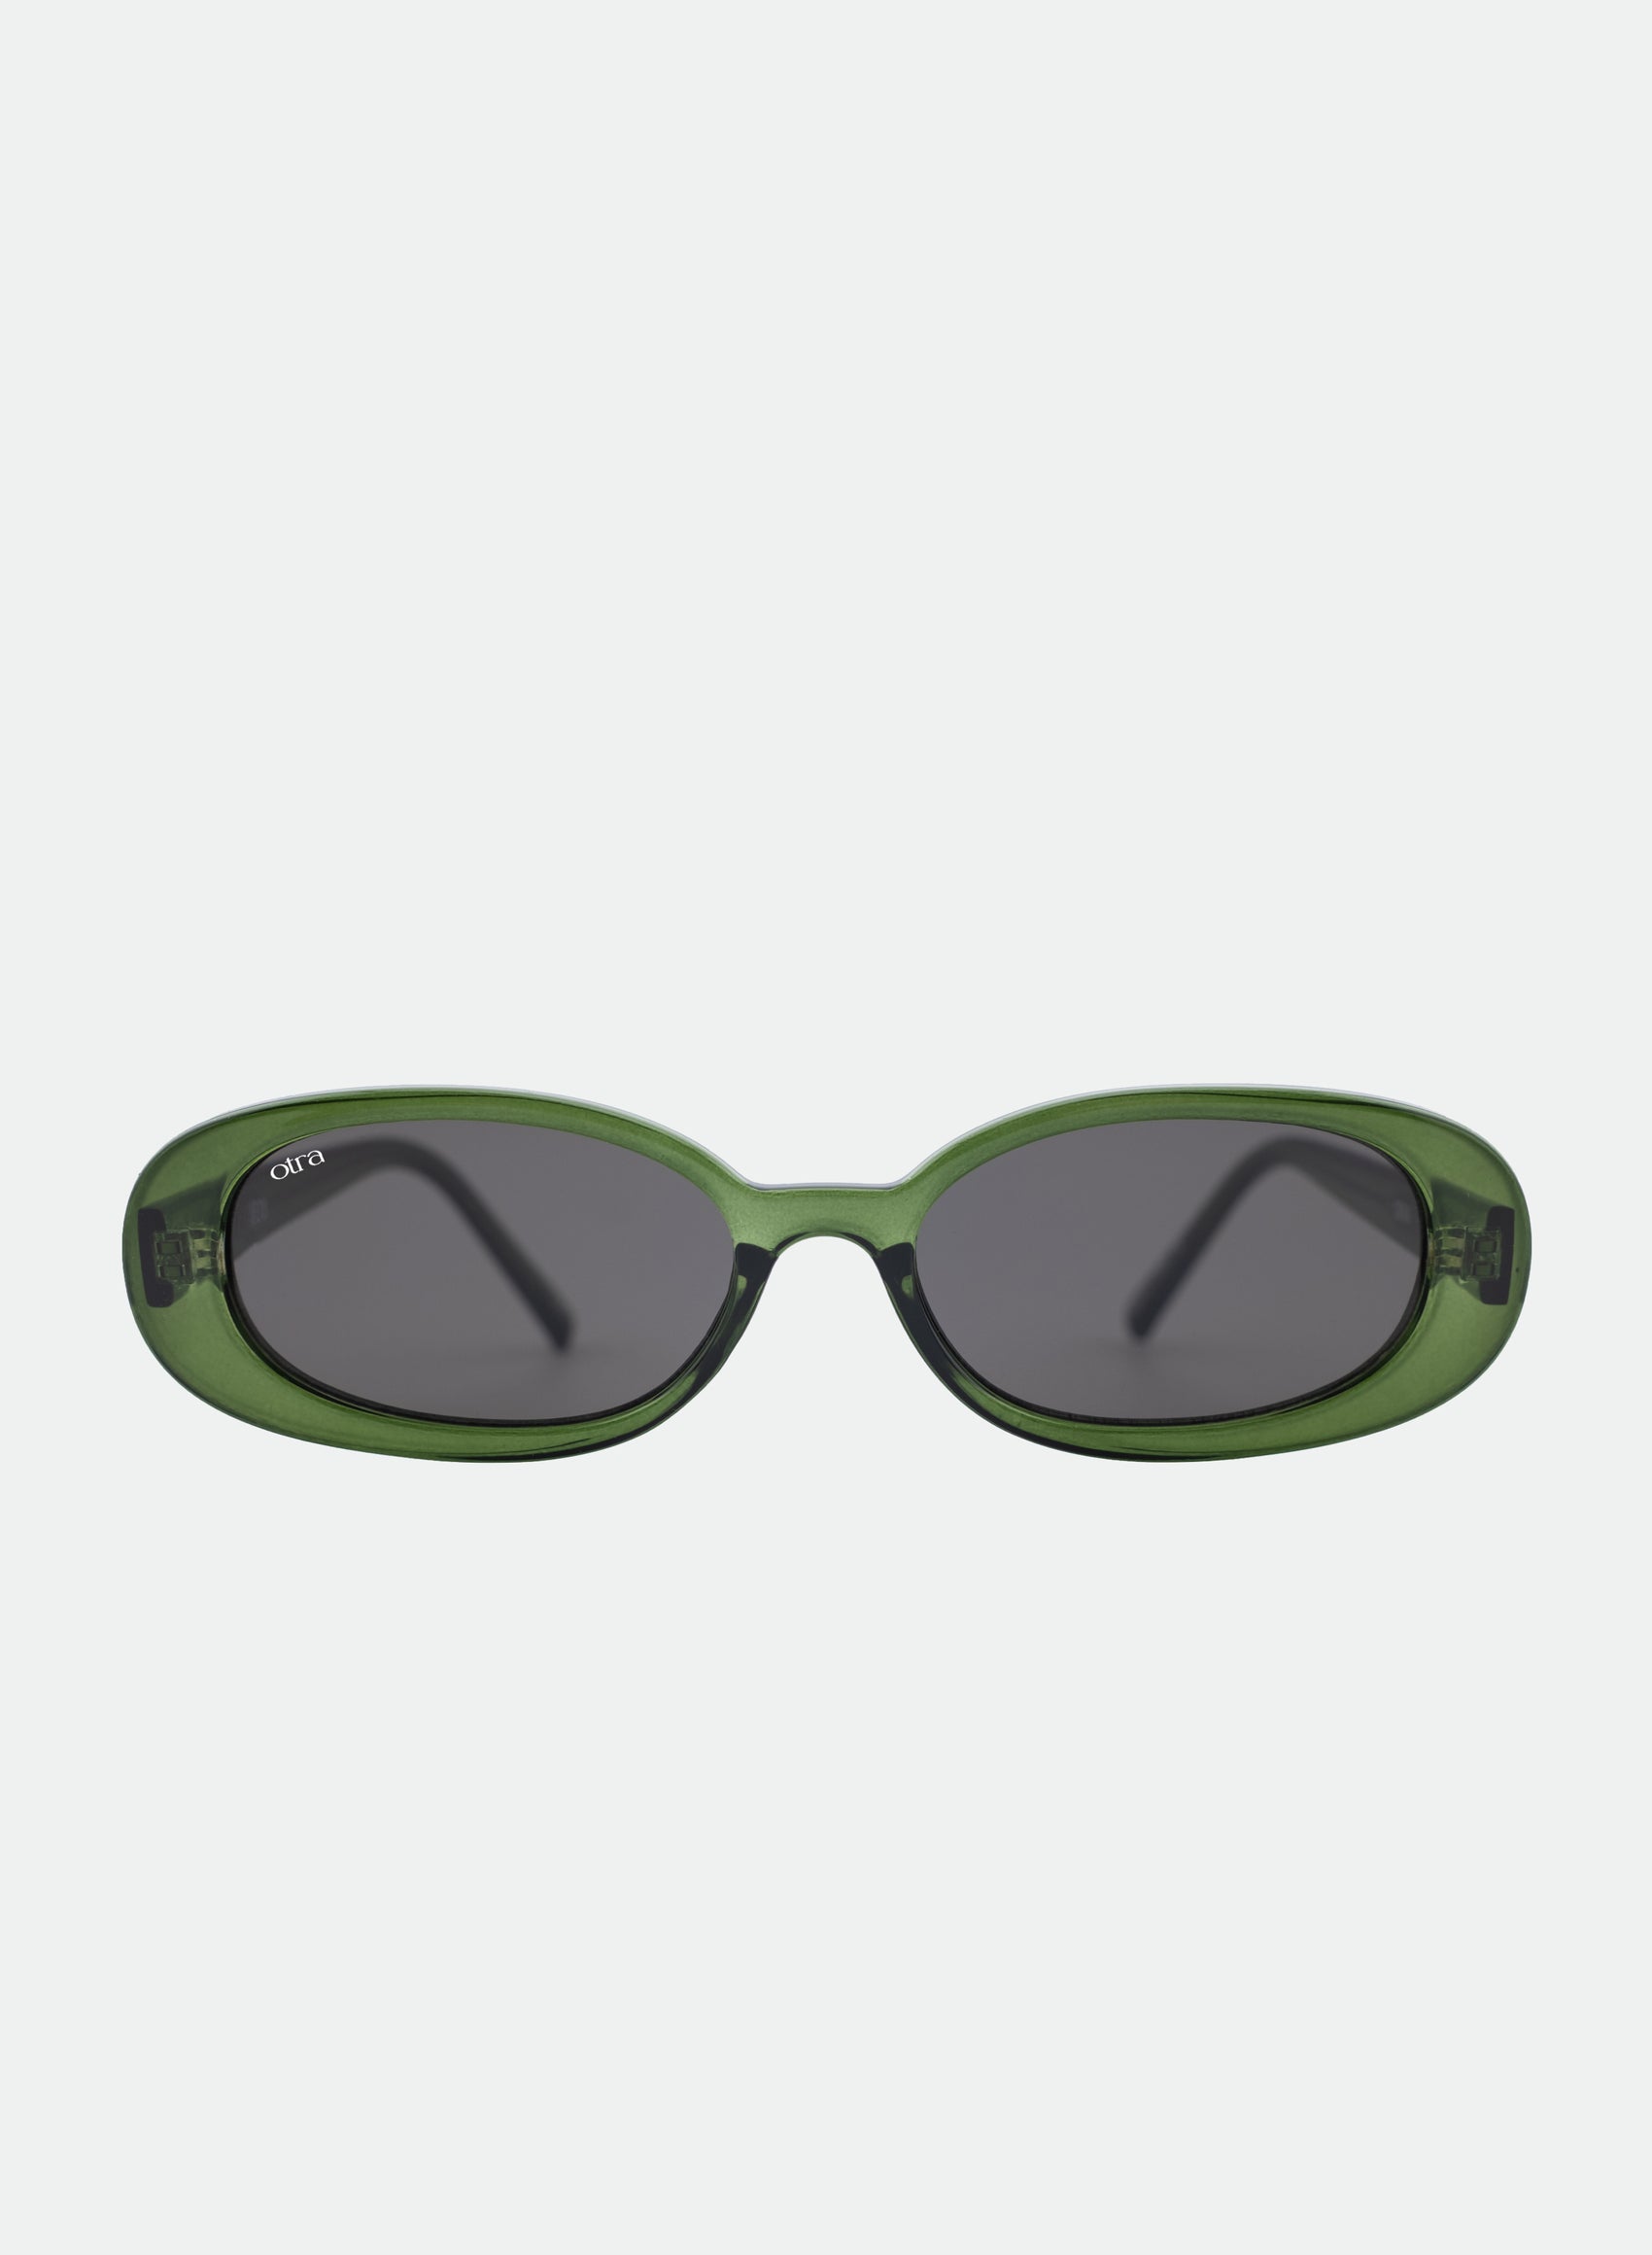 Gina sunglasses in green matcha